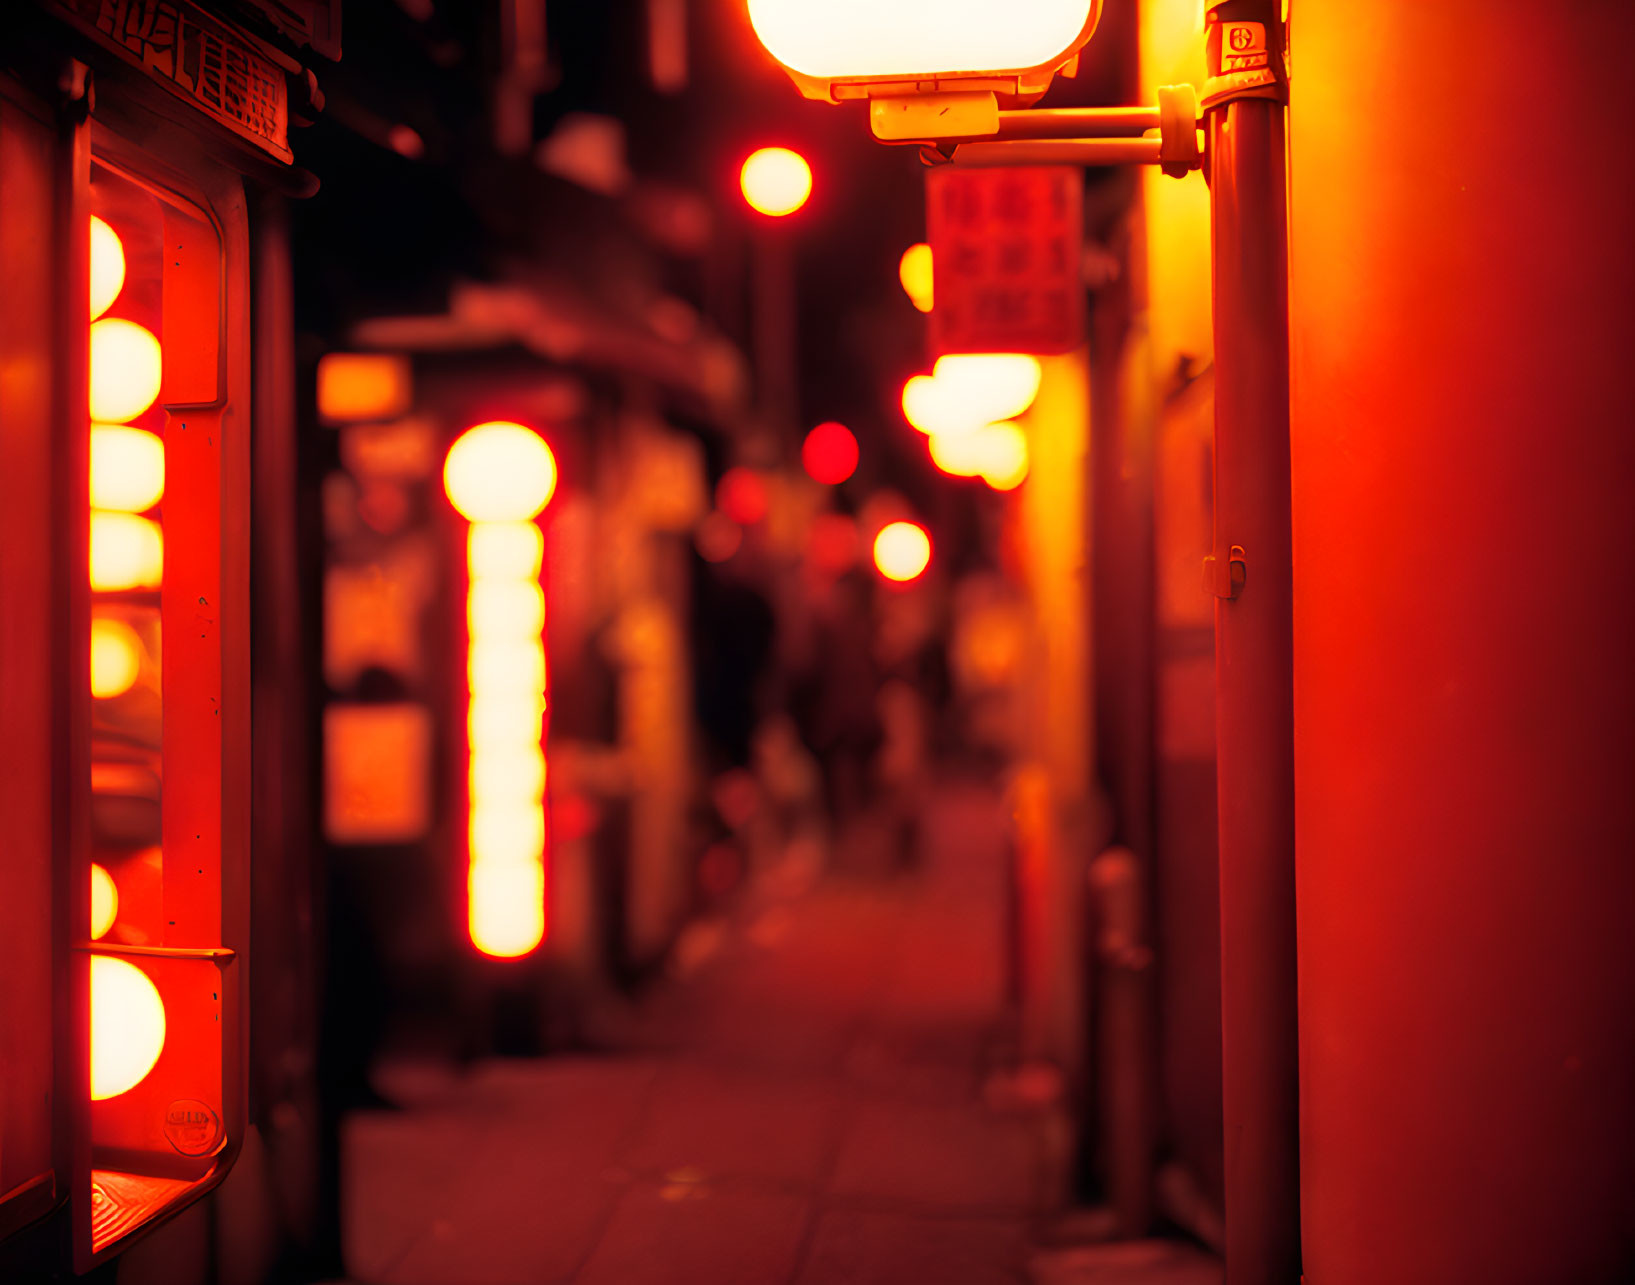 Vibrant red and orange lights illuminate a night alley scene.